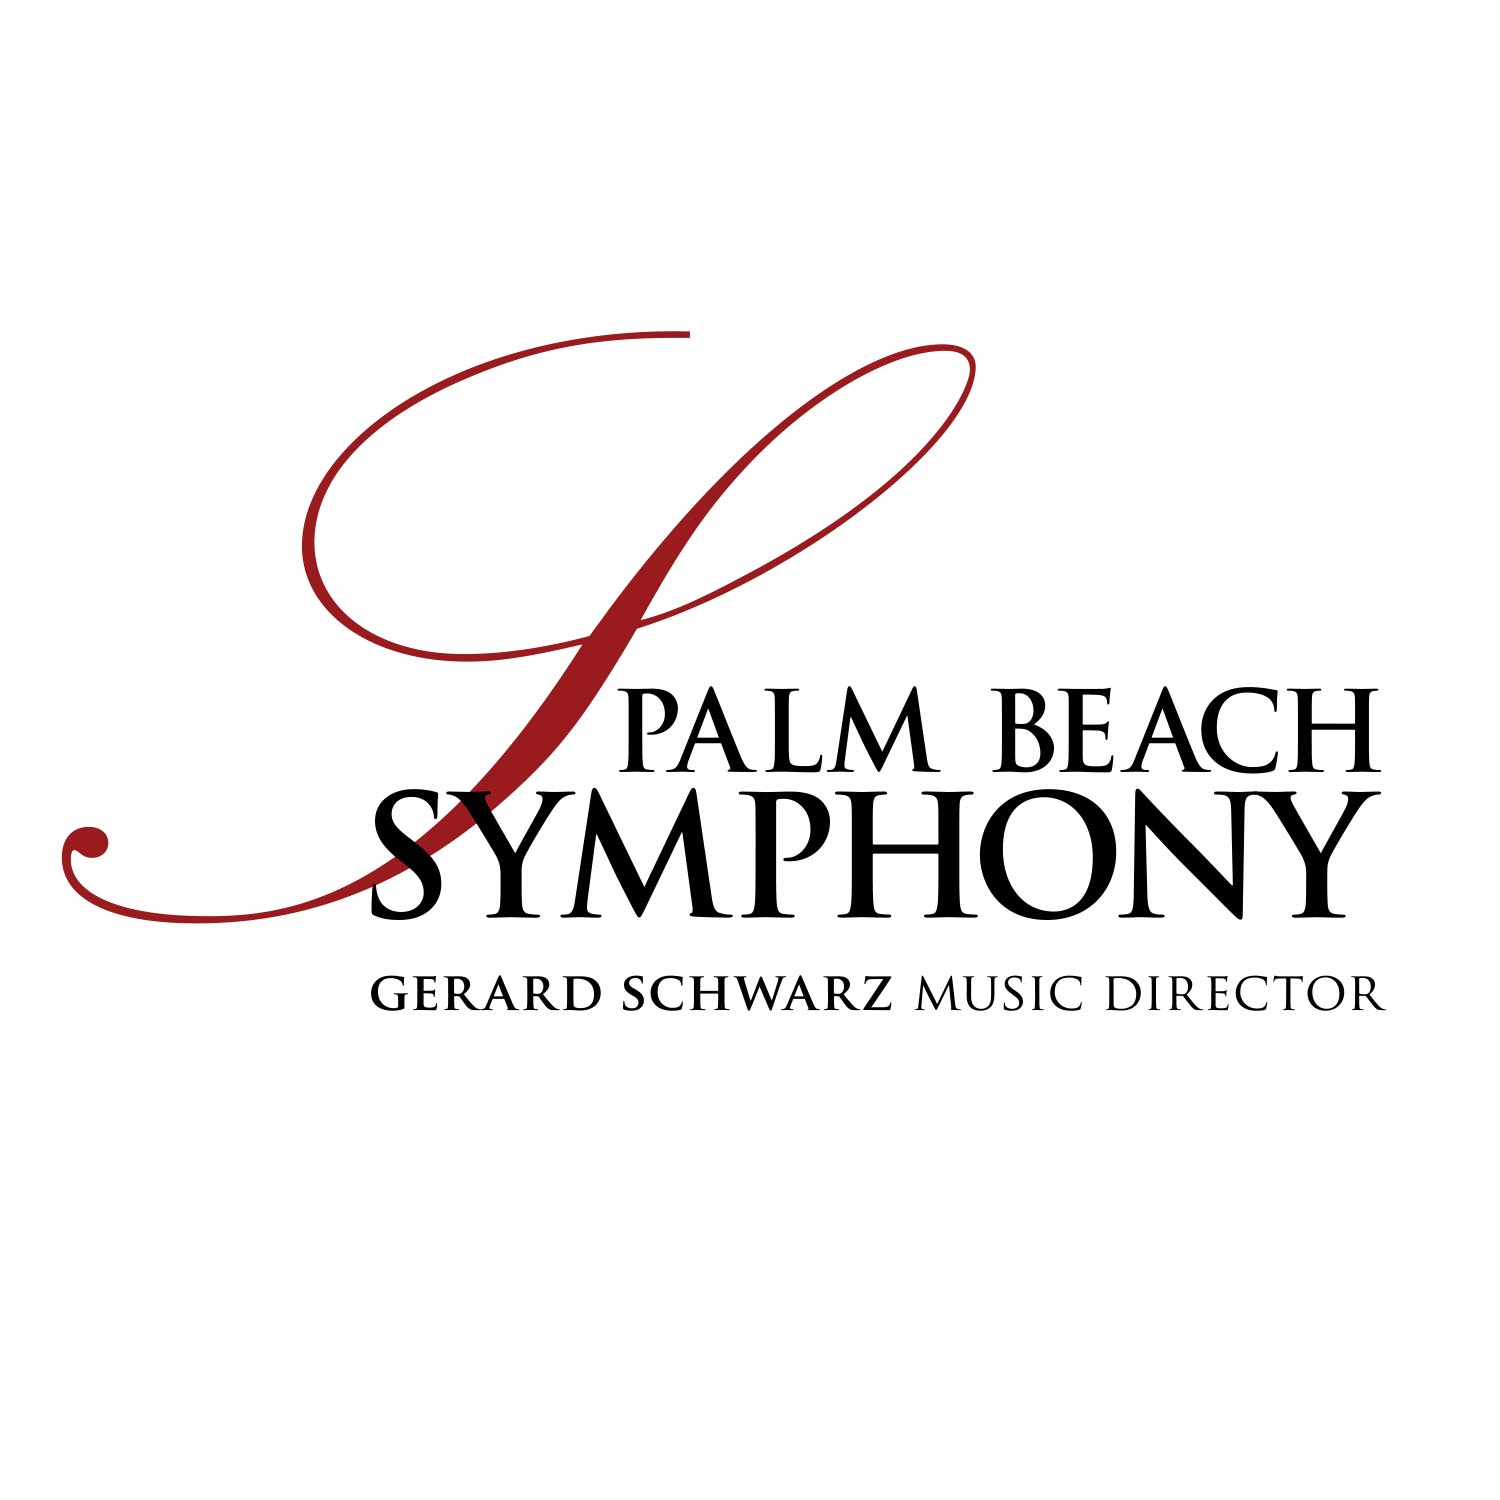 Partners of Palm Beach Symphony